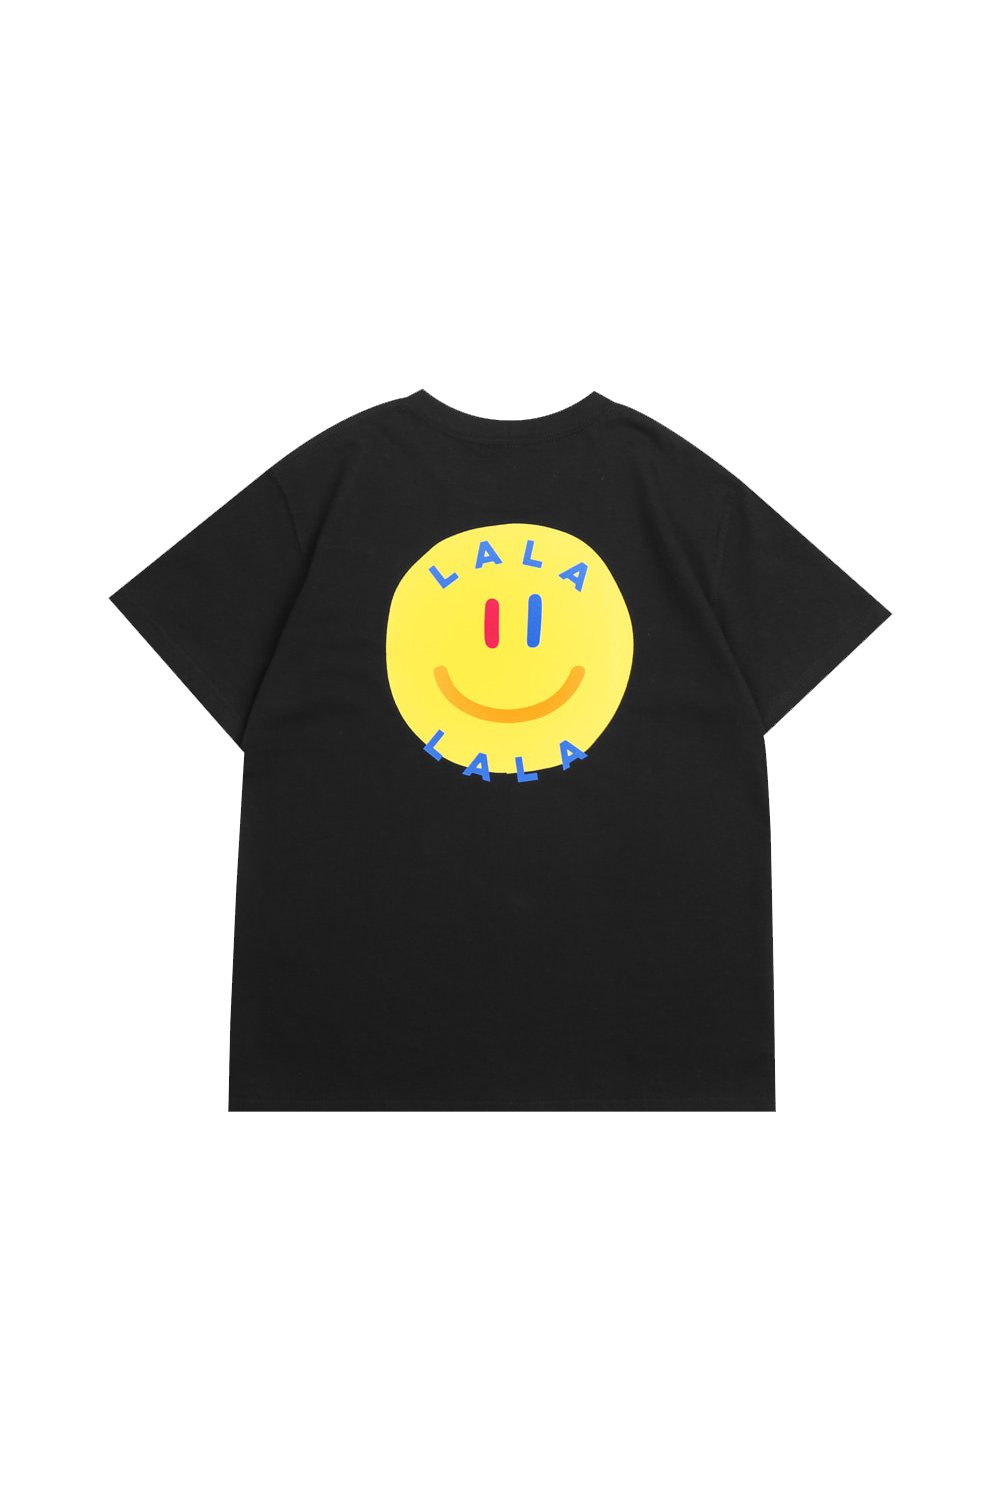 LaLa T-Shirt [Black]